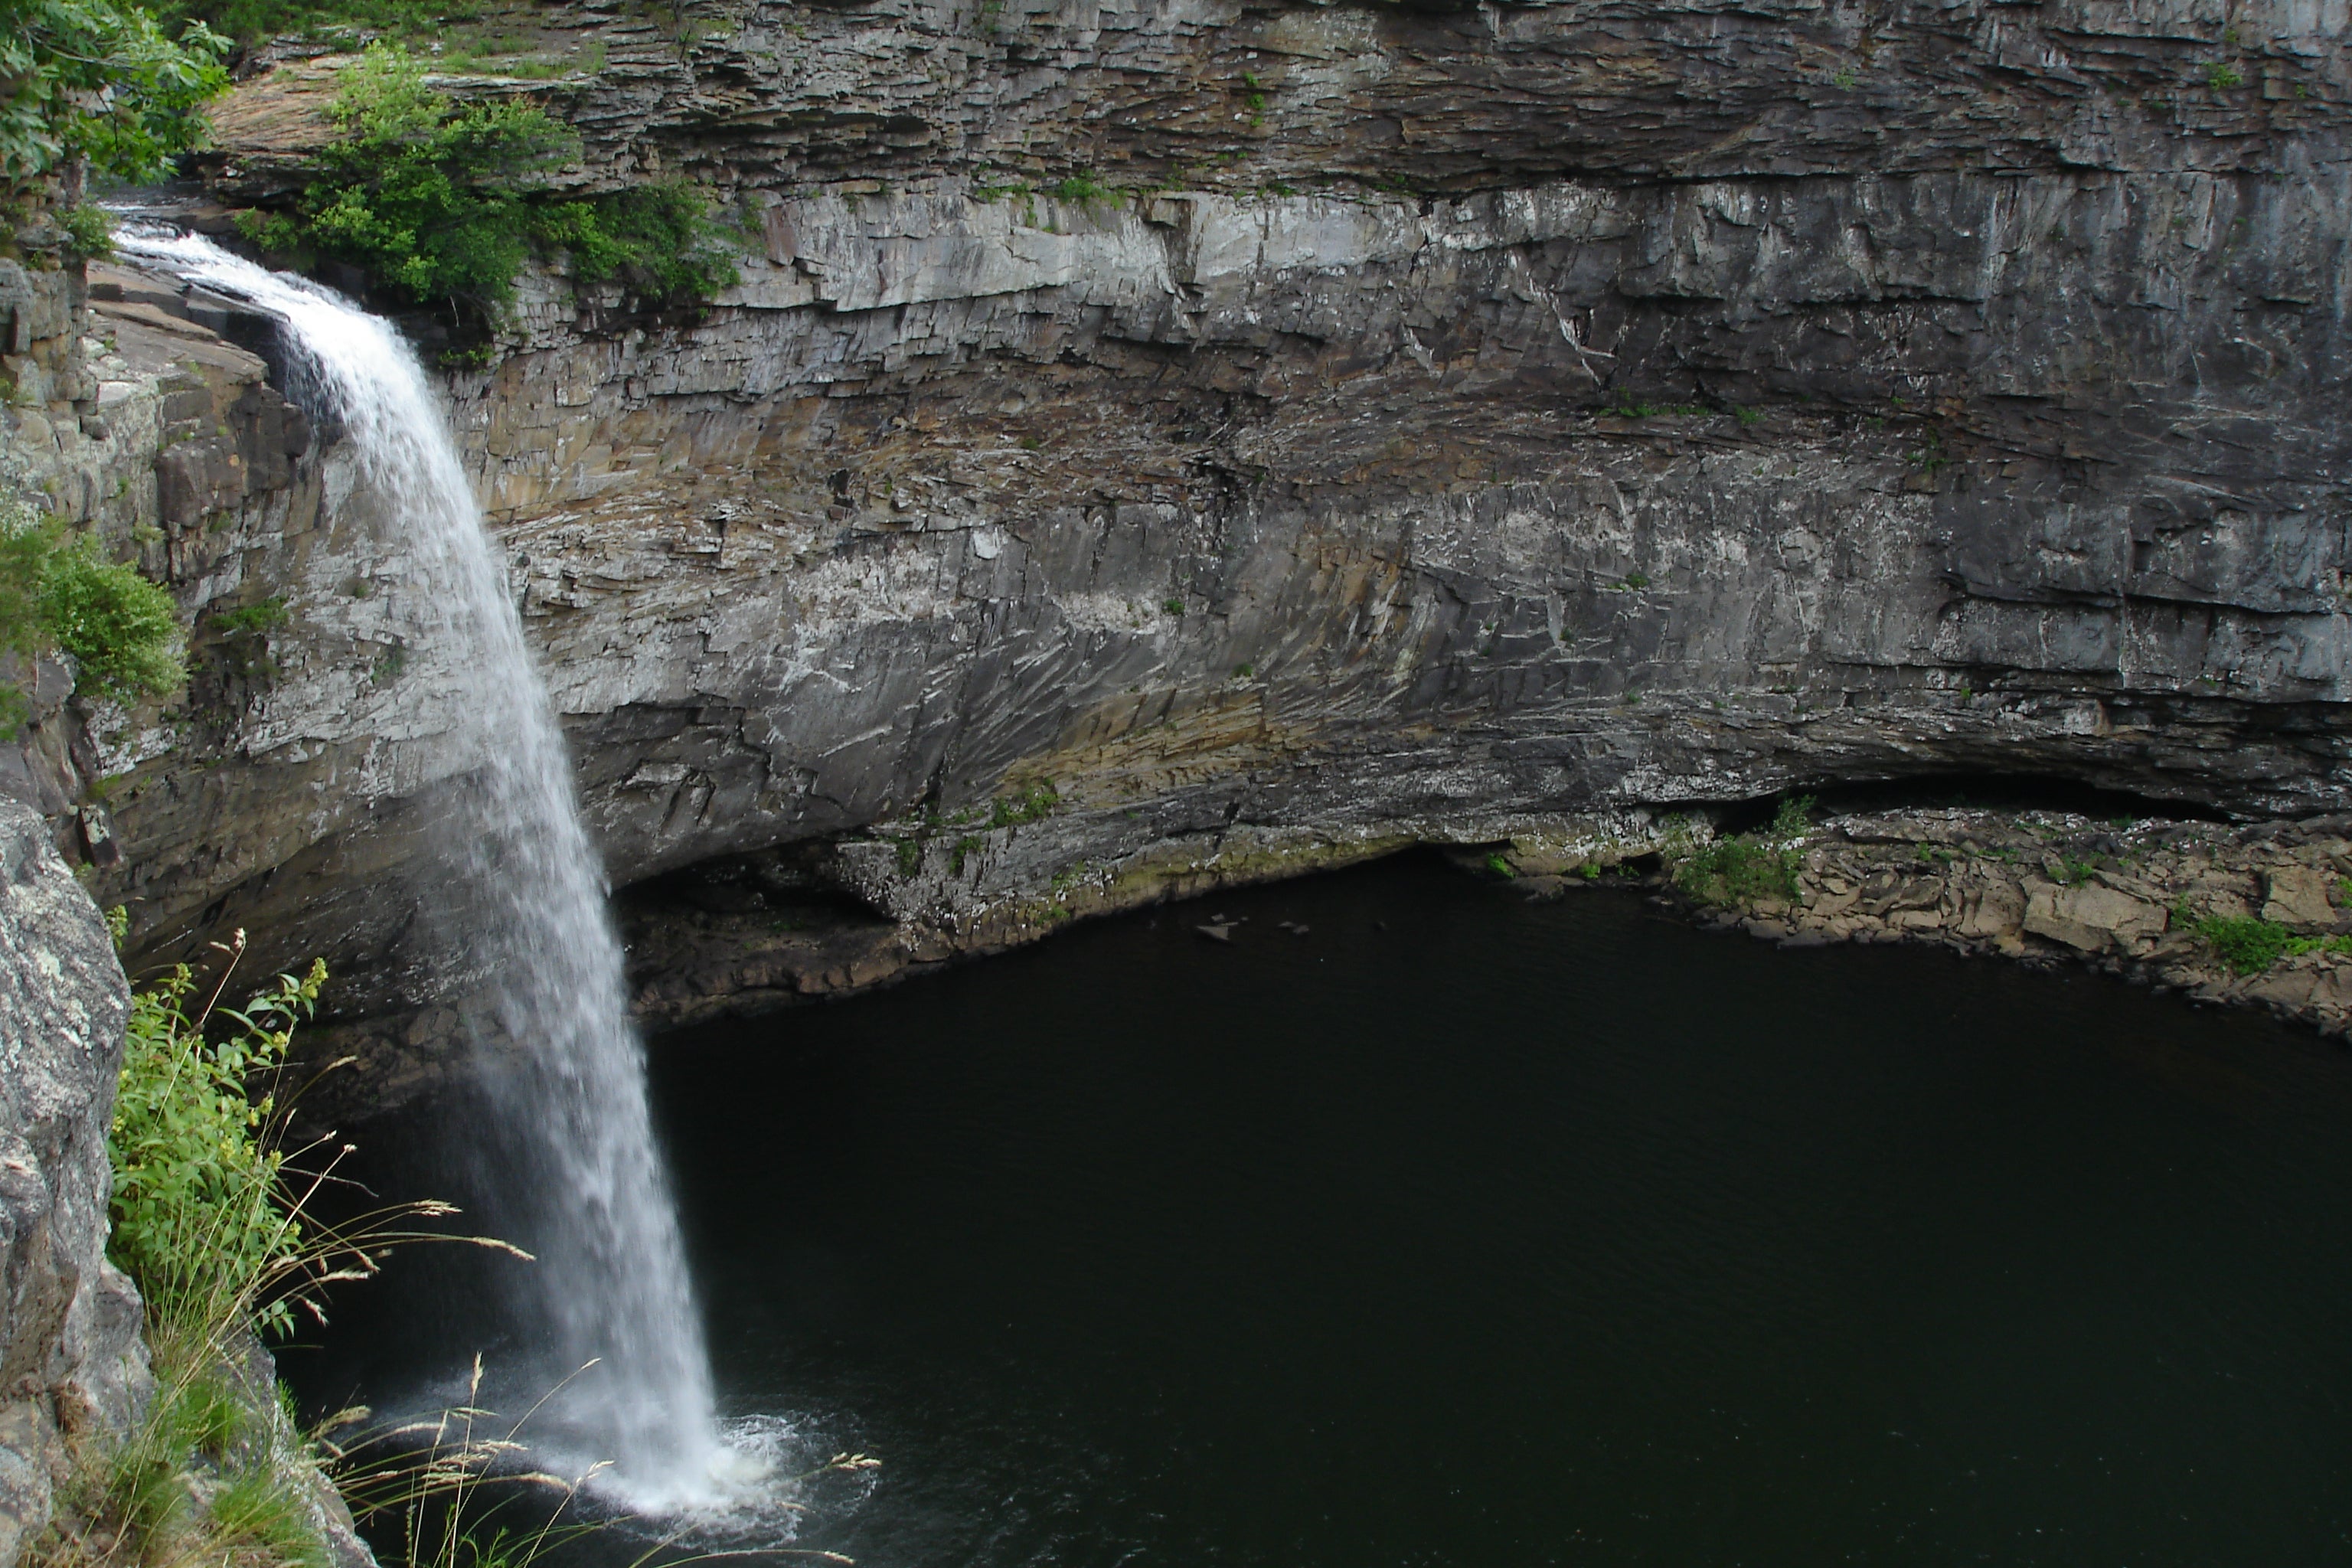 Scenic DeSoto Falls at DeSoto State Park near Fort Payne, Alabama